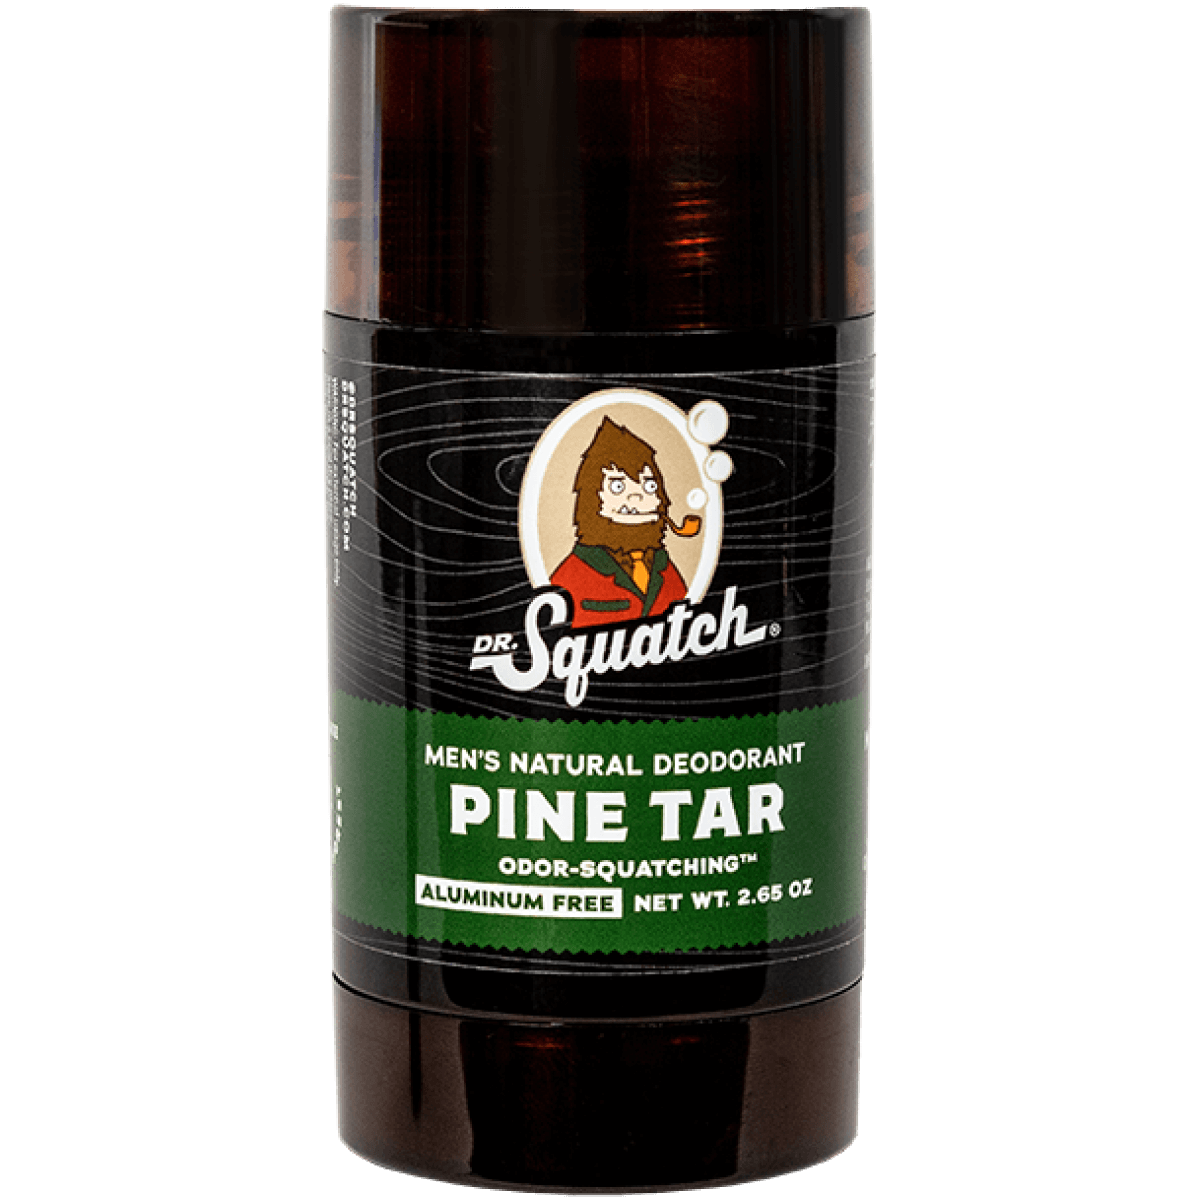 Pine Tar Deodorant - 6 units